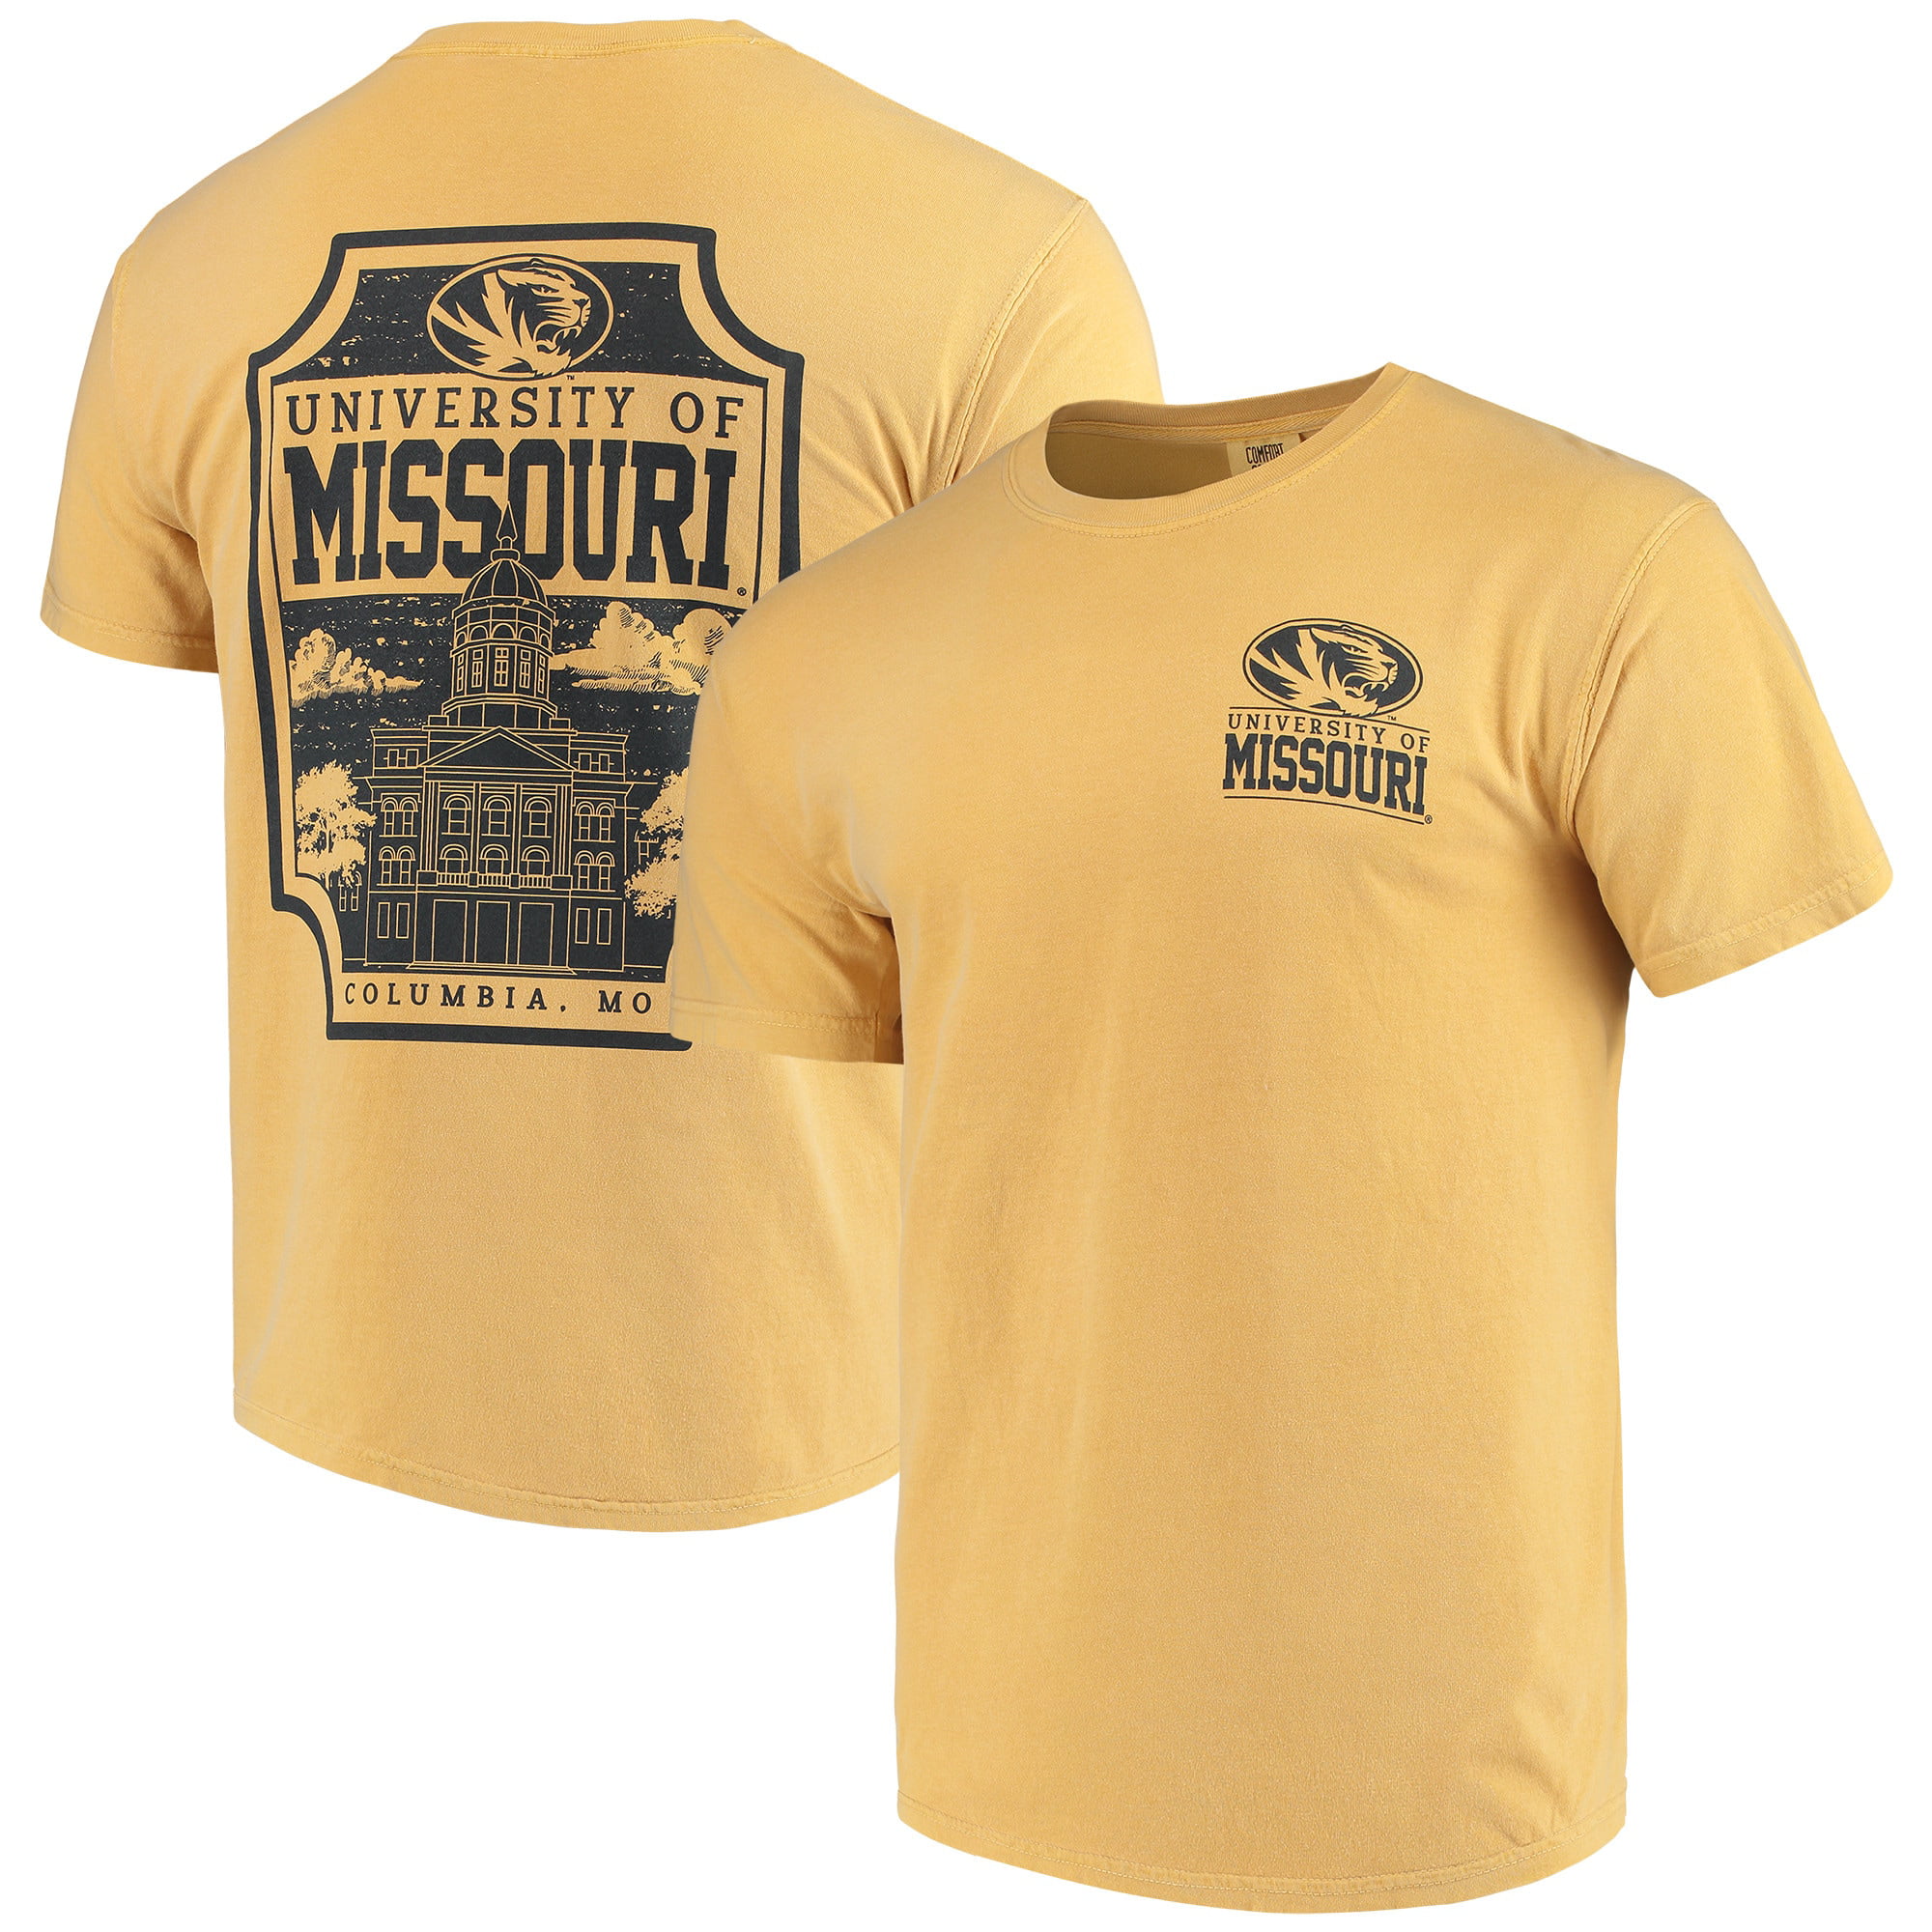 NCAA Missouri Mizzou Tigers T-Shirt Hardwood Star College University 